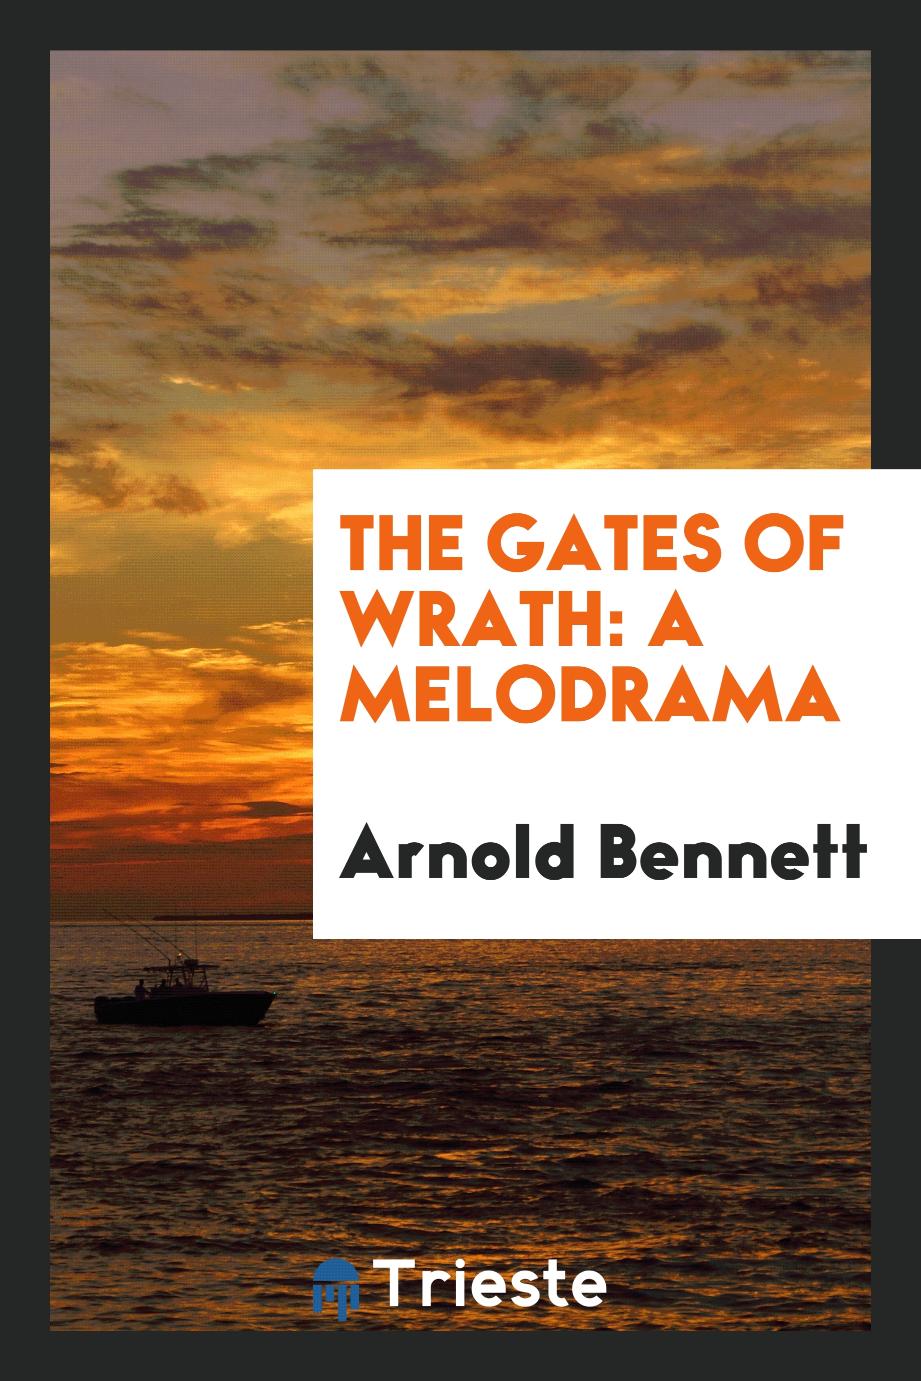 Arnold Bennett - The gates of wrath: a melodrama